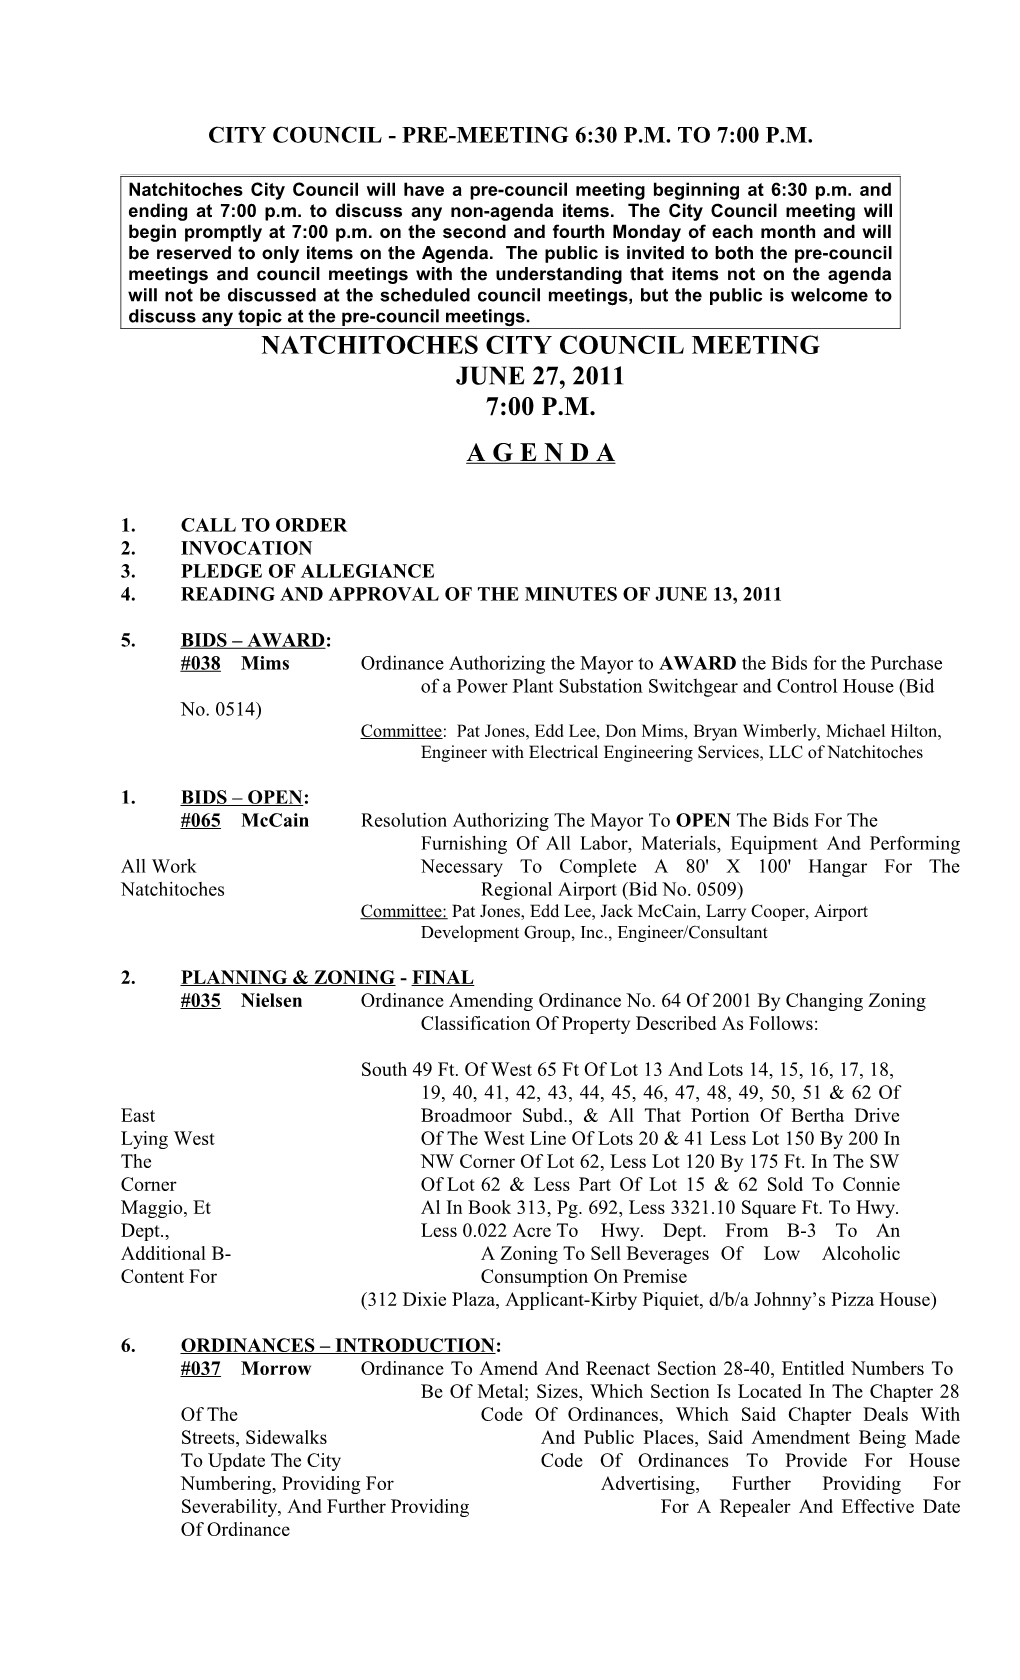 City Council - Pre-Meeting 6:30 P.M. to 7:00 P.M